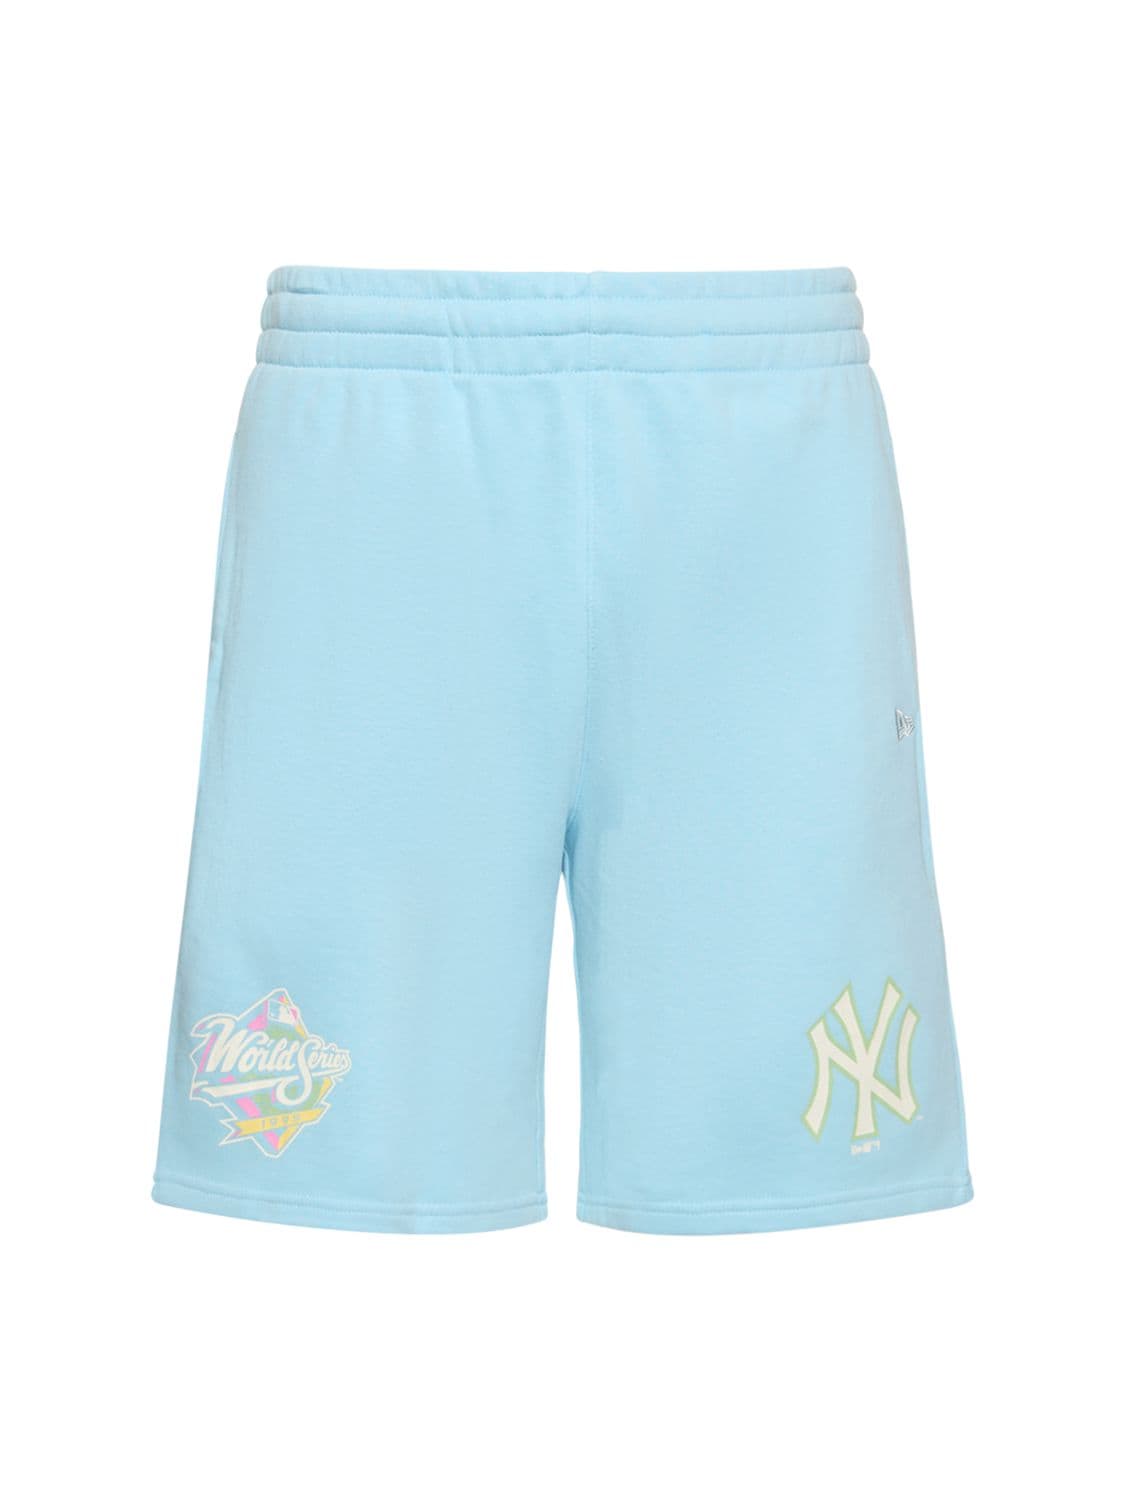 N.y. Yankees Cotton Blend Shorts – MEN > CLOTHING > SHORTS